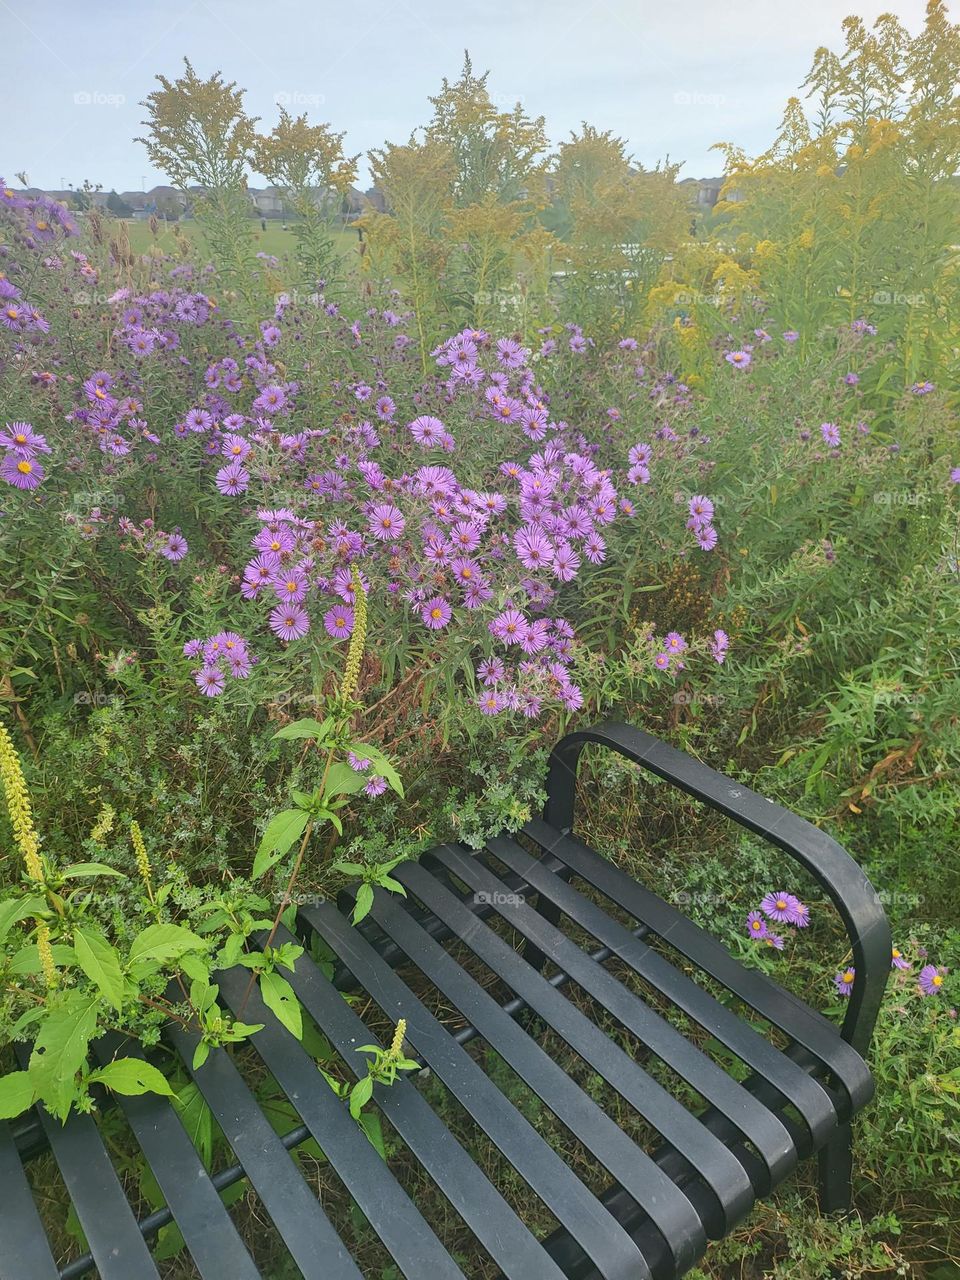 wild flowers, bench, park, greenery, wilderness, wild, purple, yellow, flowers, purple flowers, steel bench, scenic, sitting,